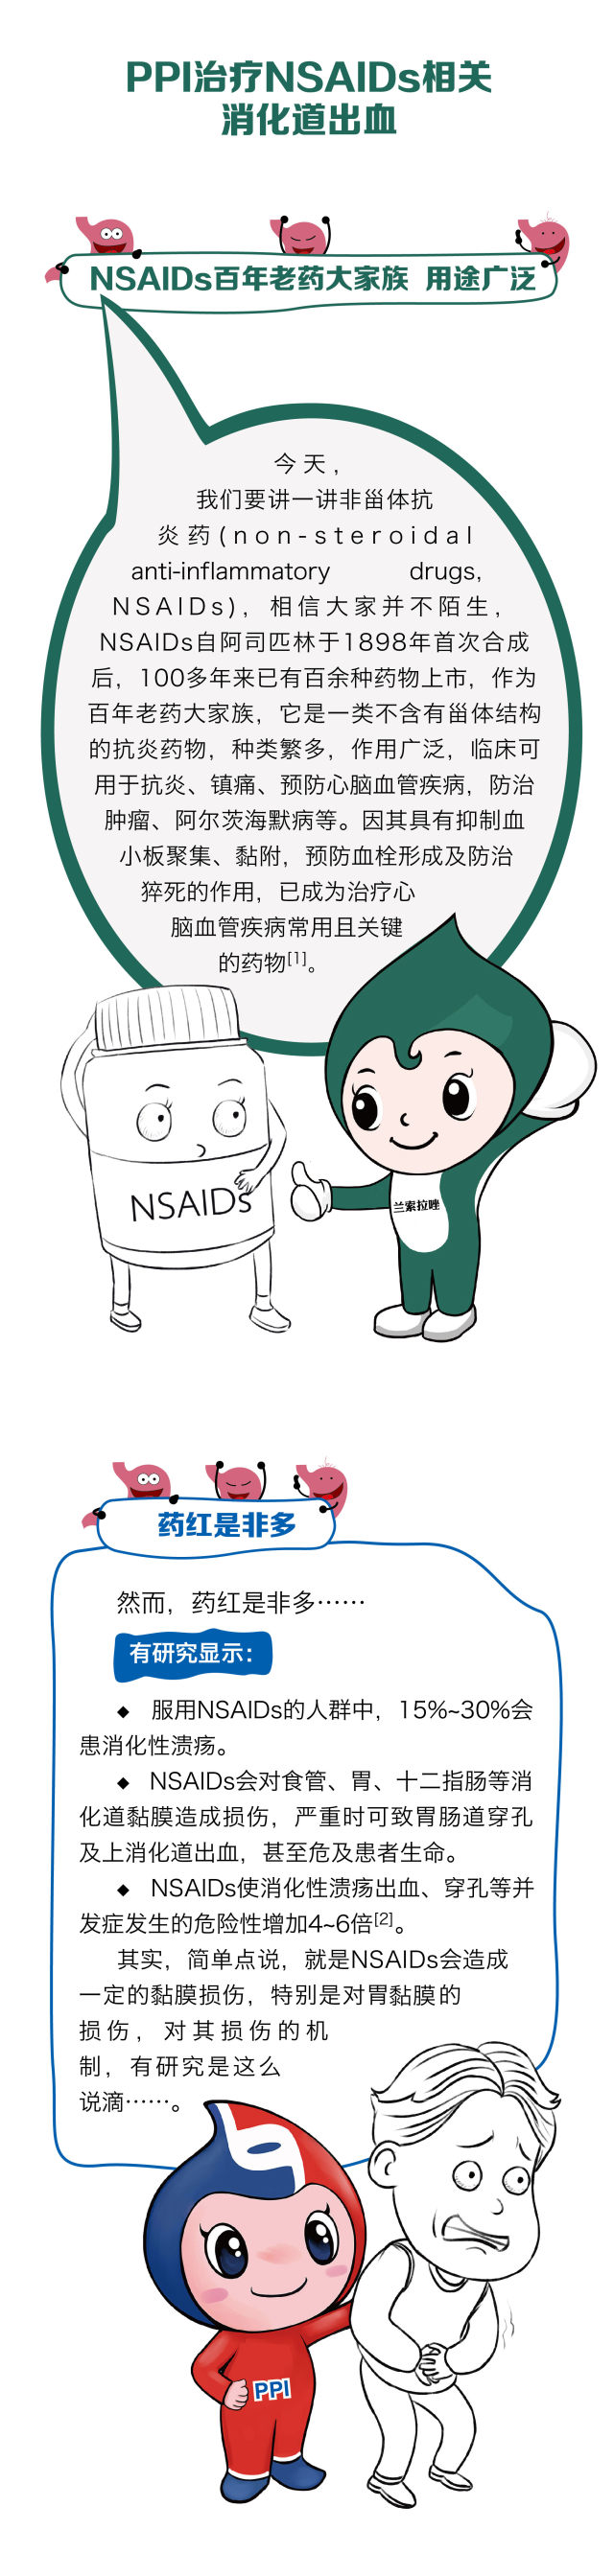 PPI 治疗NSAIDs相关消化道出血-01.jpg